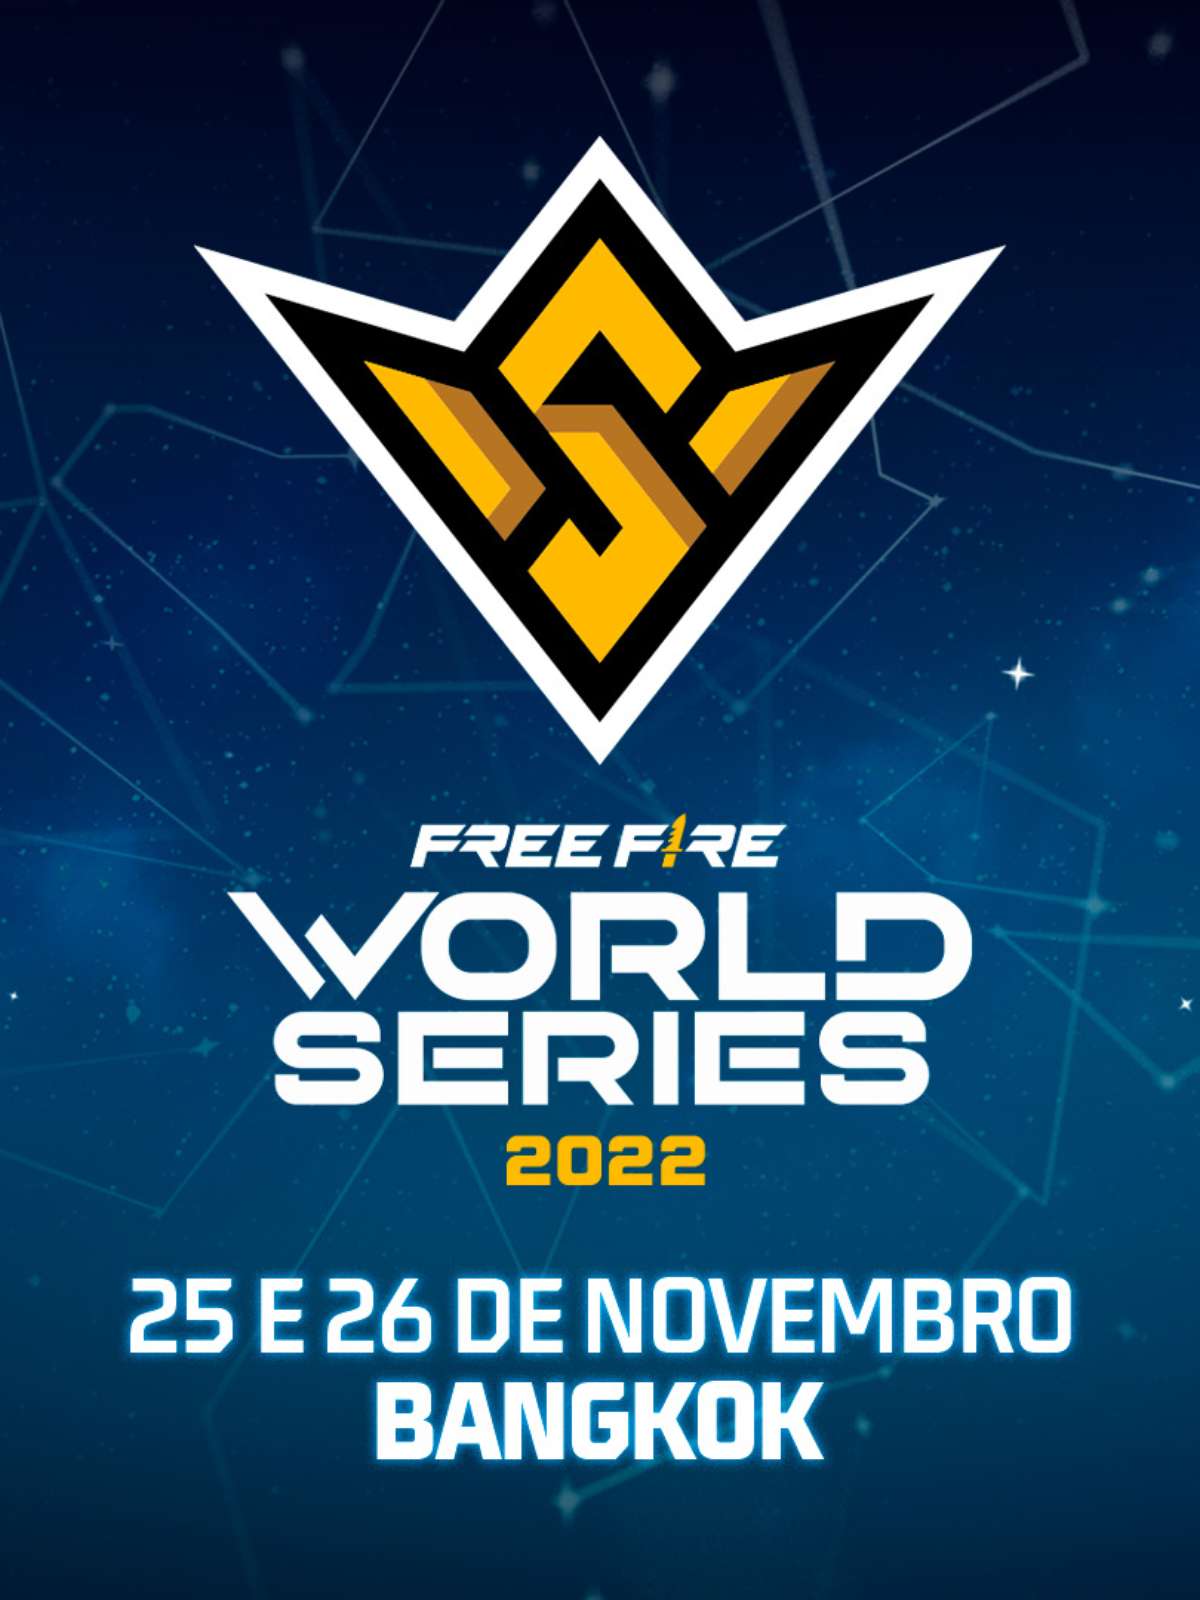 Codiguin FF GRÁTIS – Free Fire novembro 2022 - Mobile Gamer